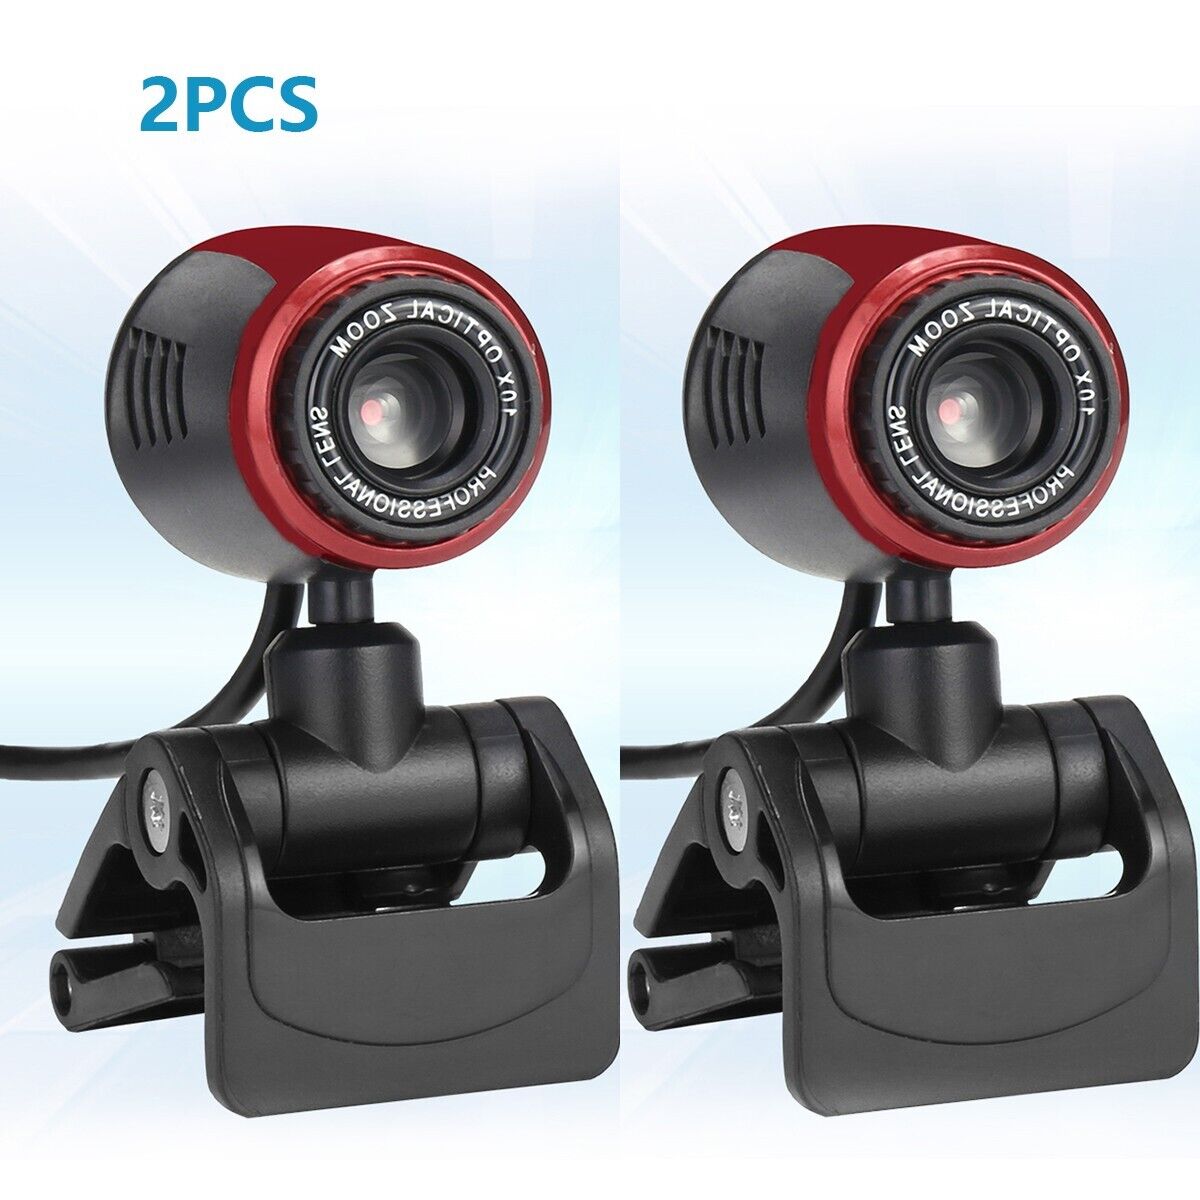 2pcs HD 1080P Webcam USB  Web Camera With Microphone For Laptop Desktop PC